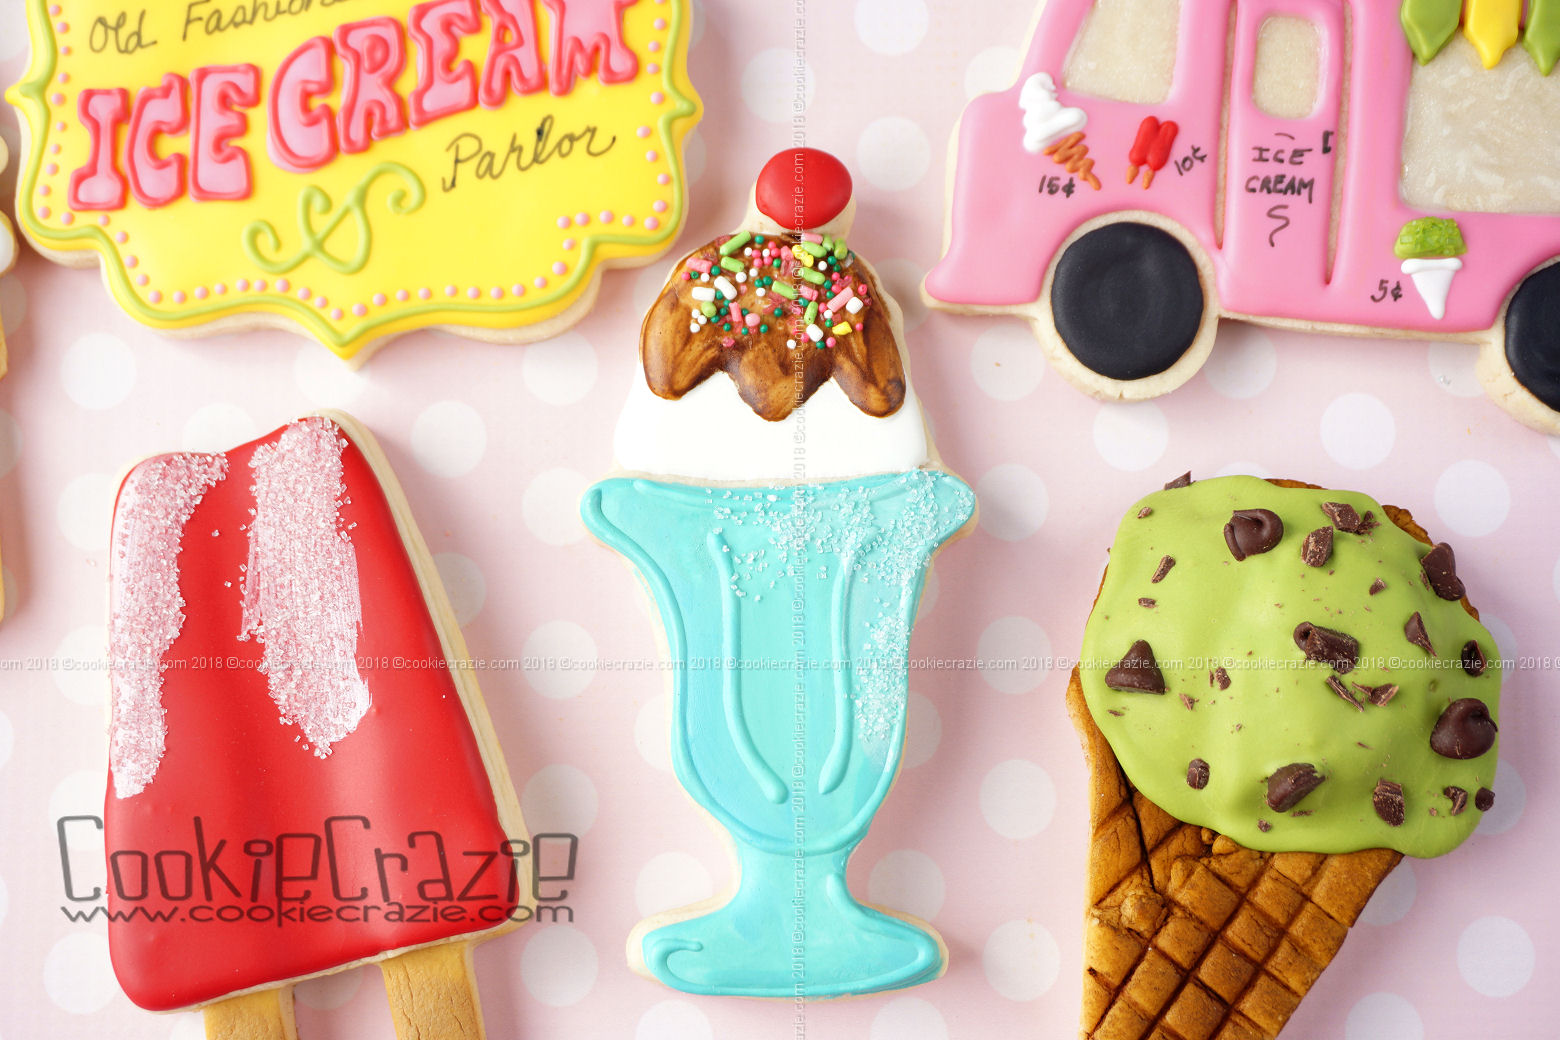  Ice Cream Sundae w Cherry Decorated Sugar Cookie YouTube video  HERE  